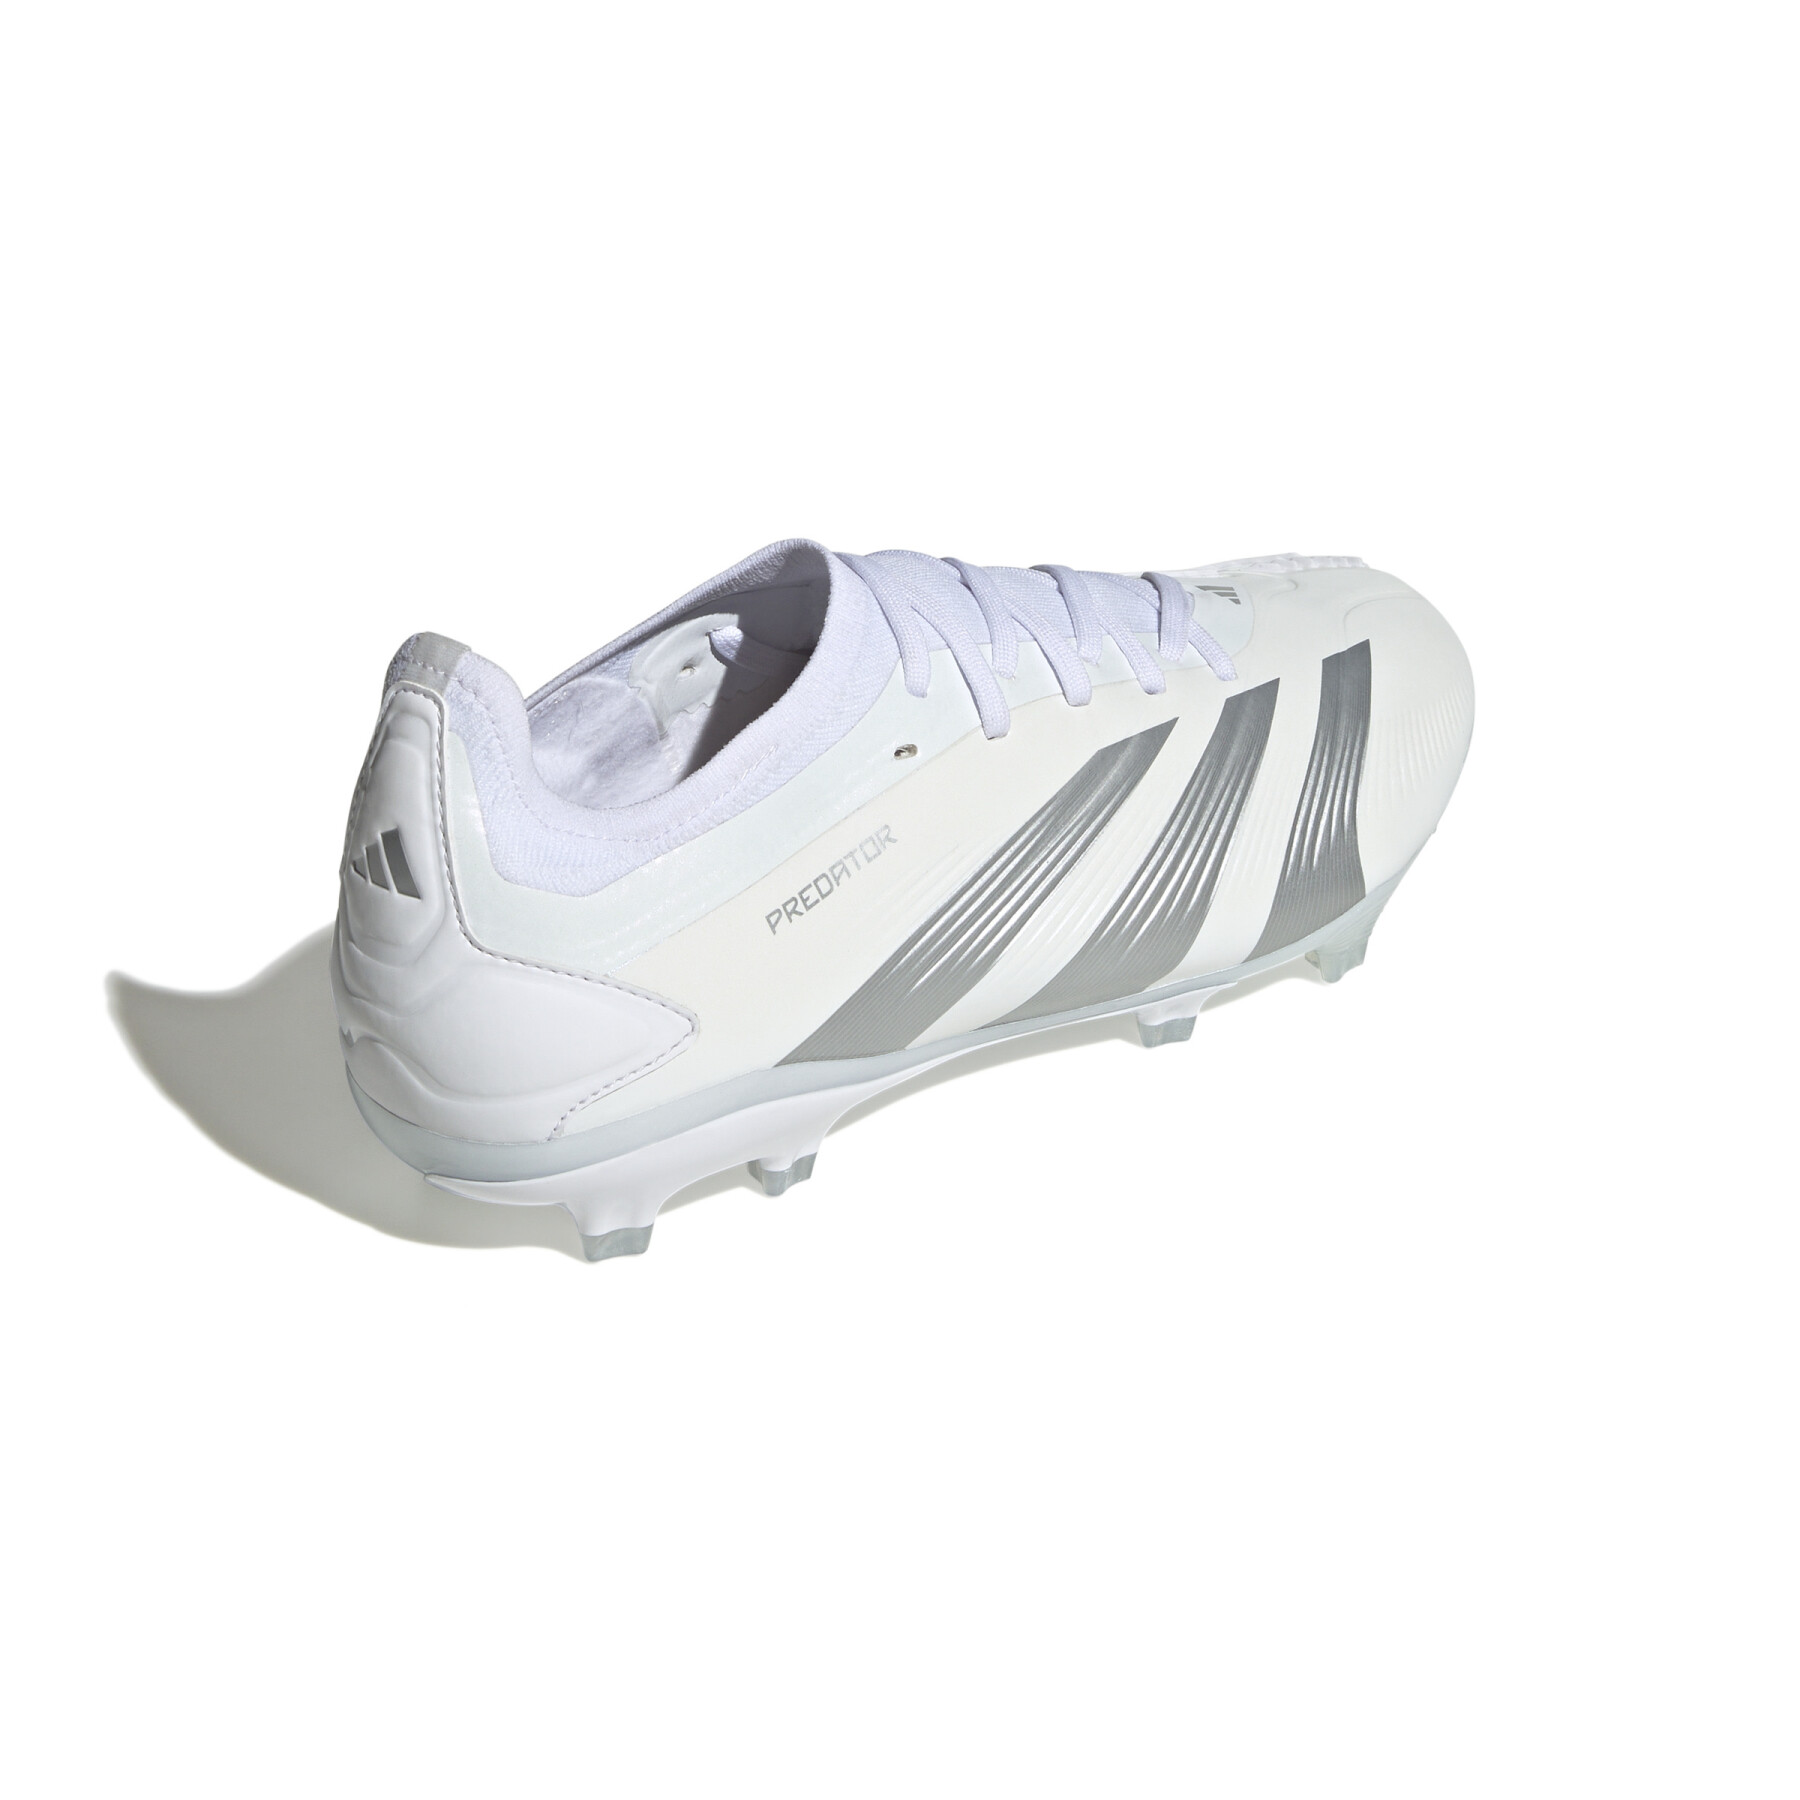 Chaussures de football adidas Predator Pro FG